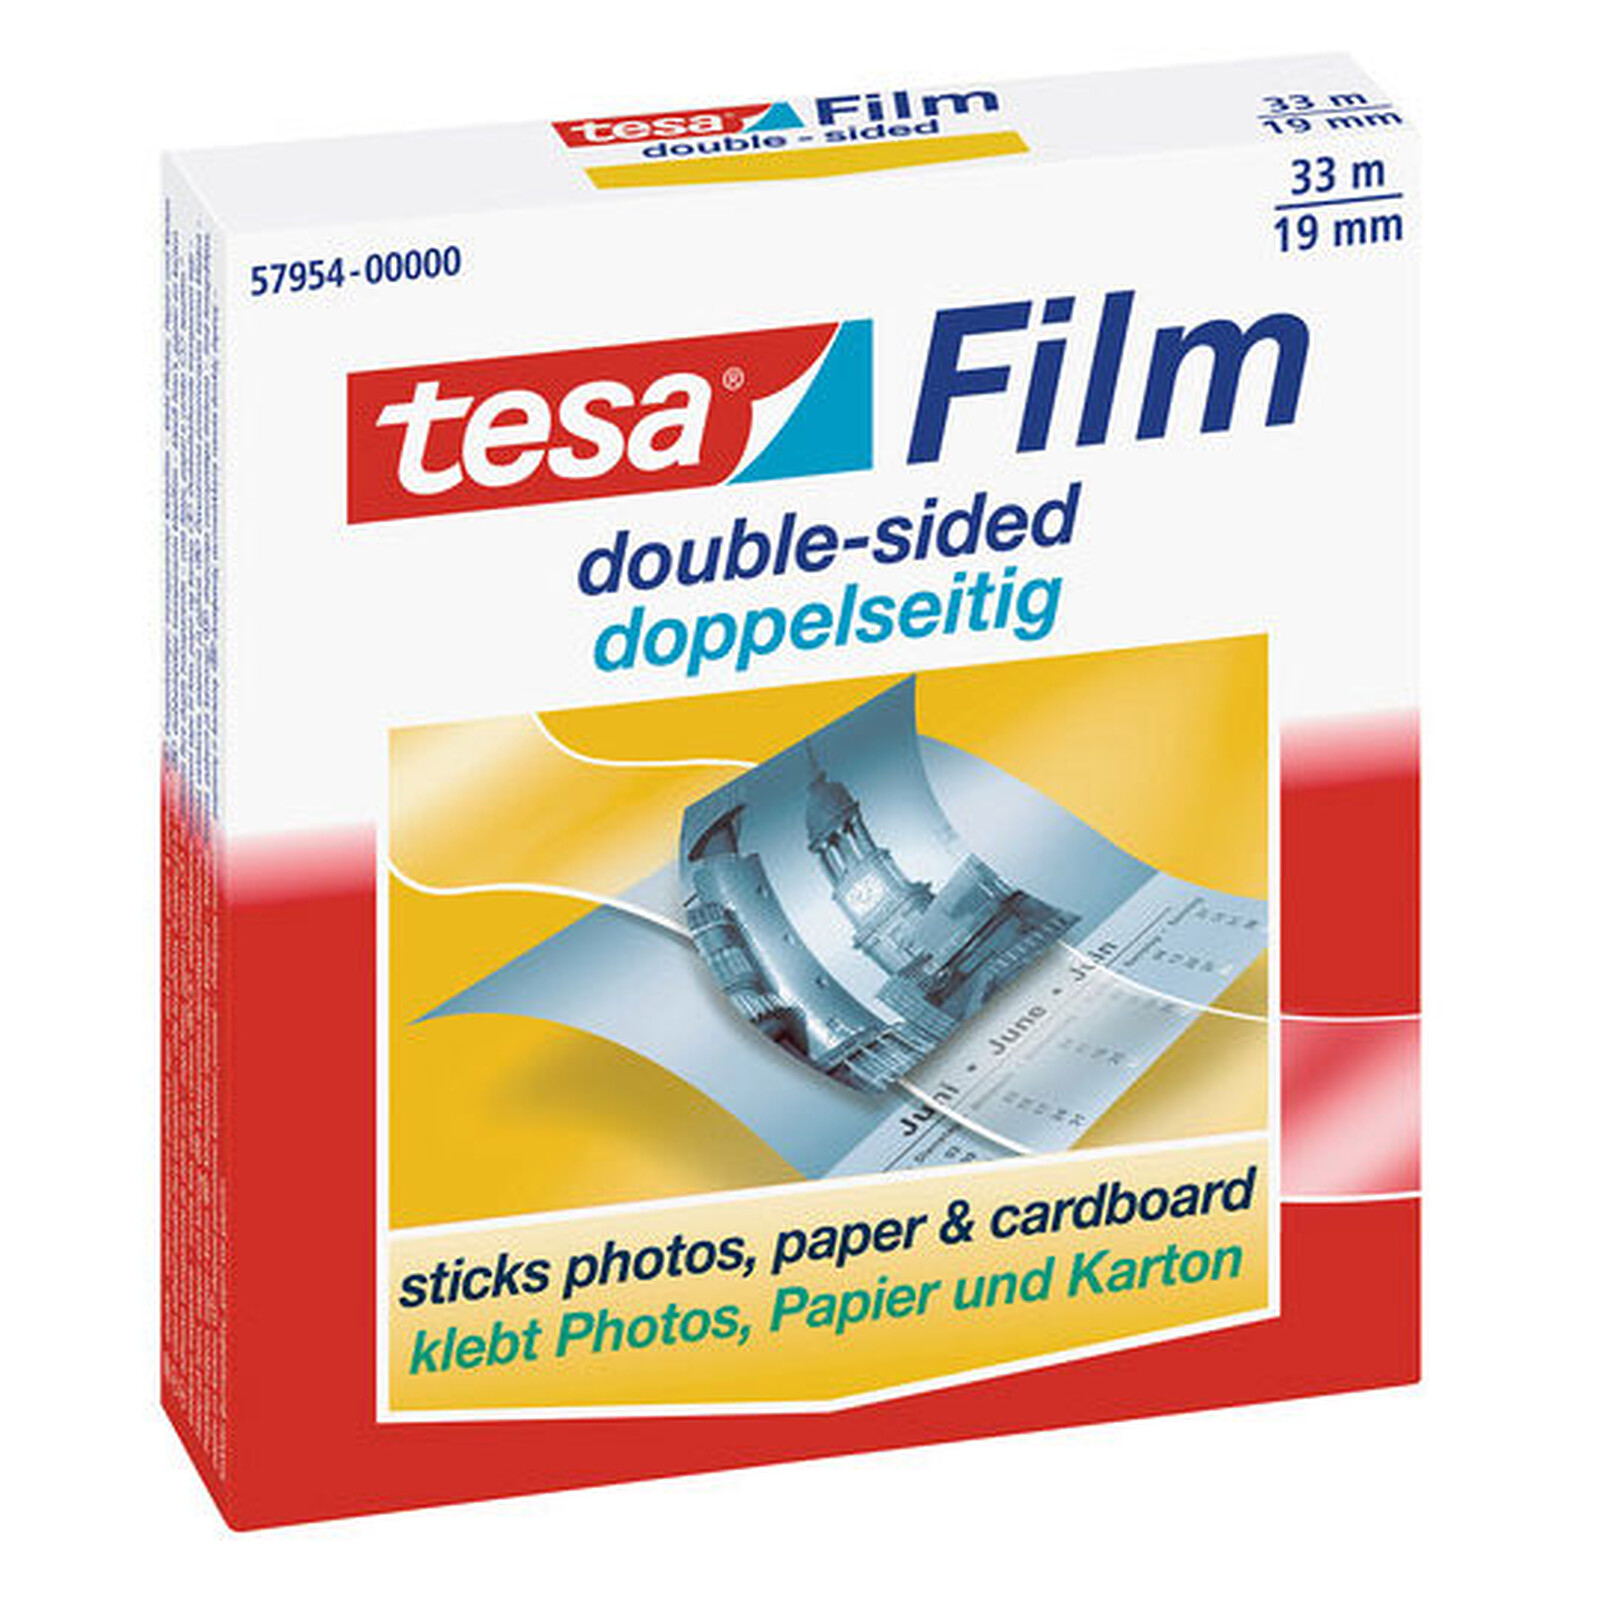 tesa Tesafilm Eco&Clear 1 rouleau 33m x 19mm - Ruban adhésif & colle - LDLC